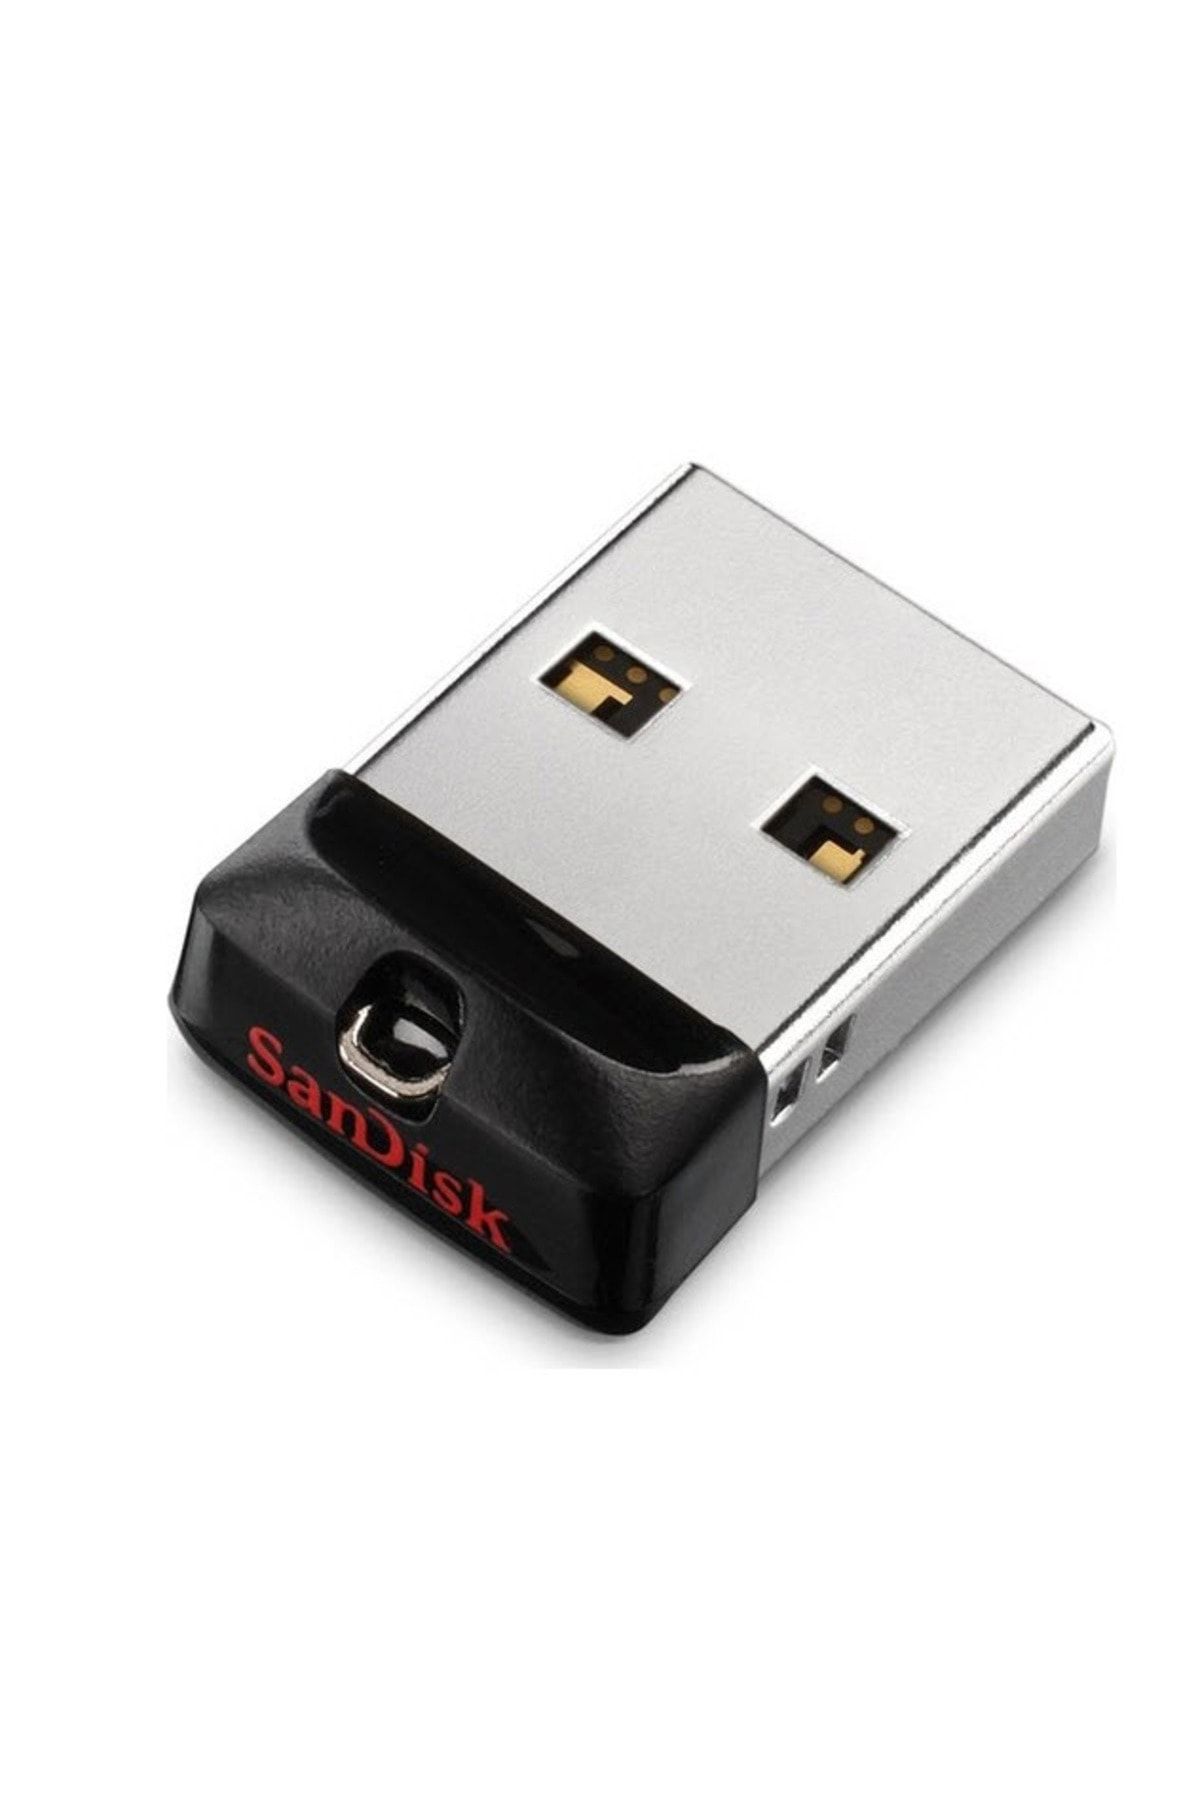 Sandisk Cruzer Fit USB 2.0 Bellek 16 GB SDCZ33-016G-G35